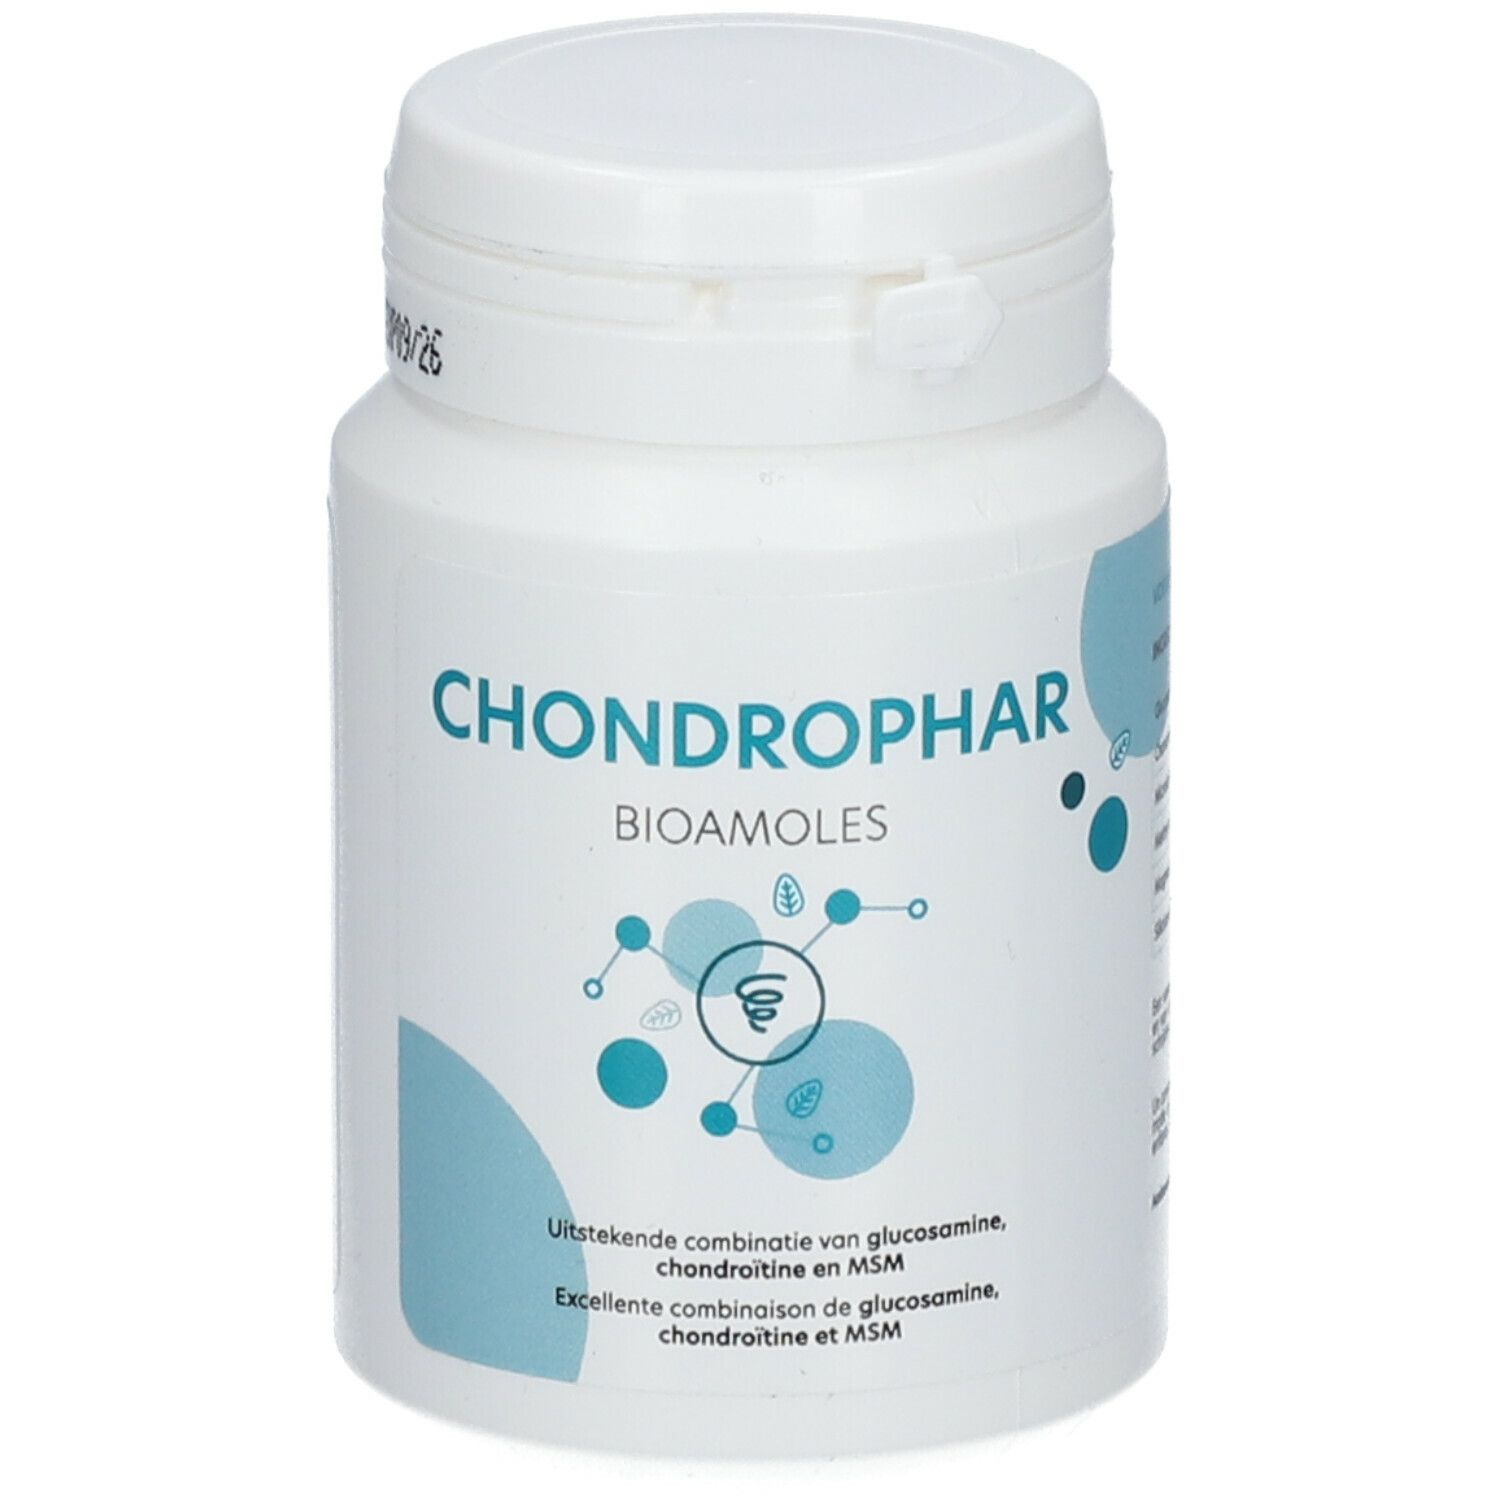 Bioamoles Chondrophar